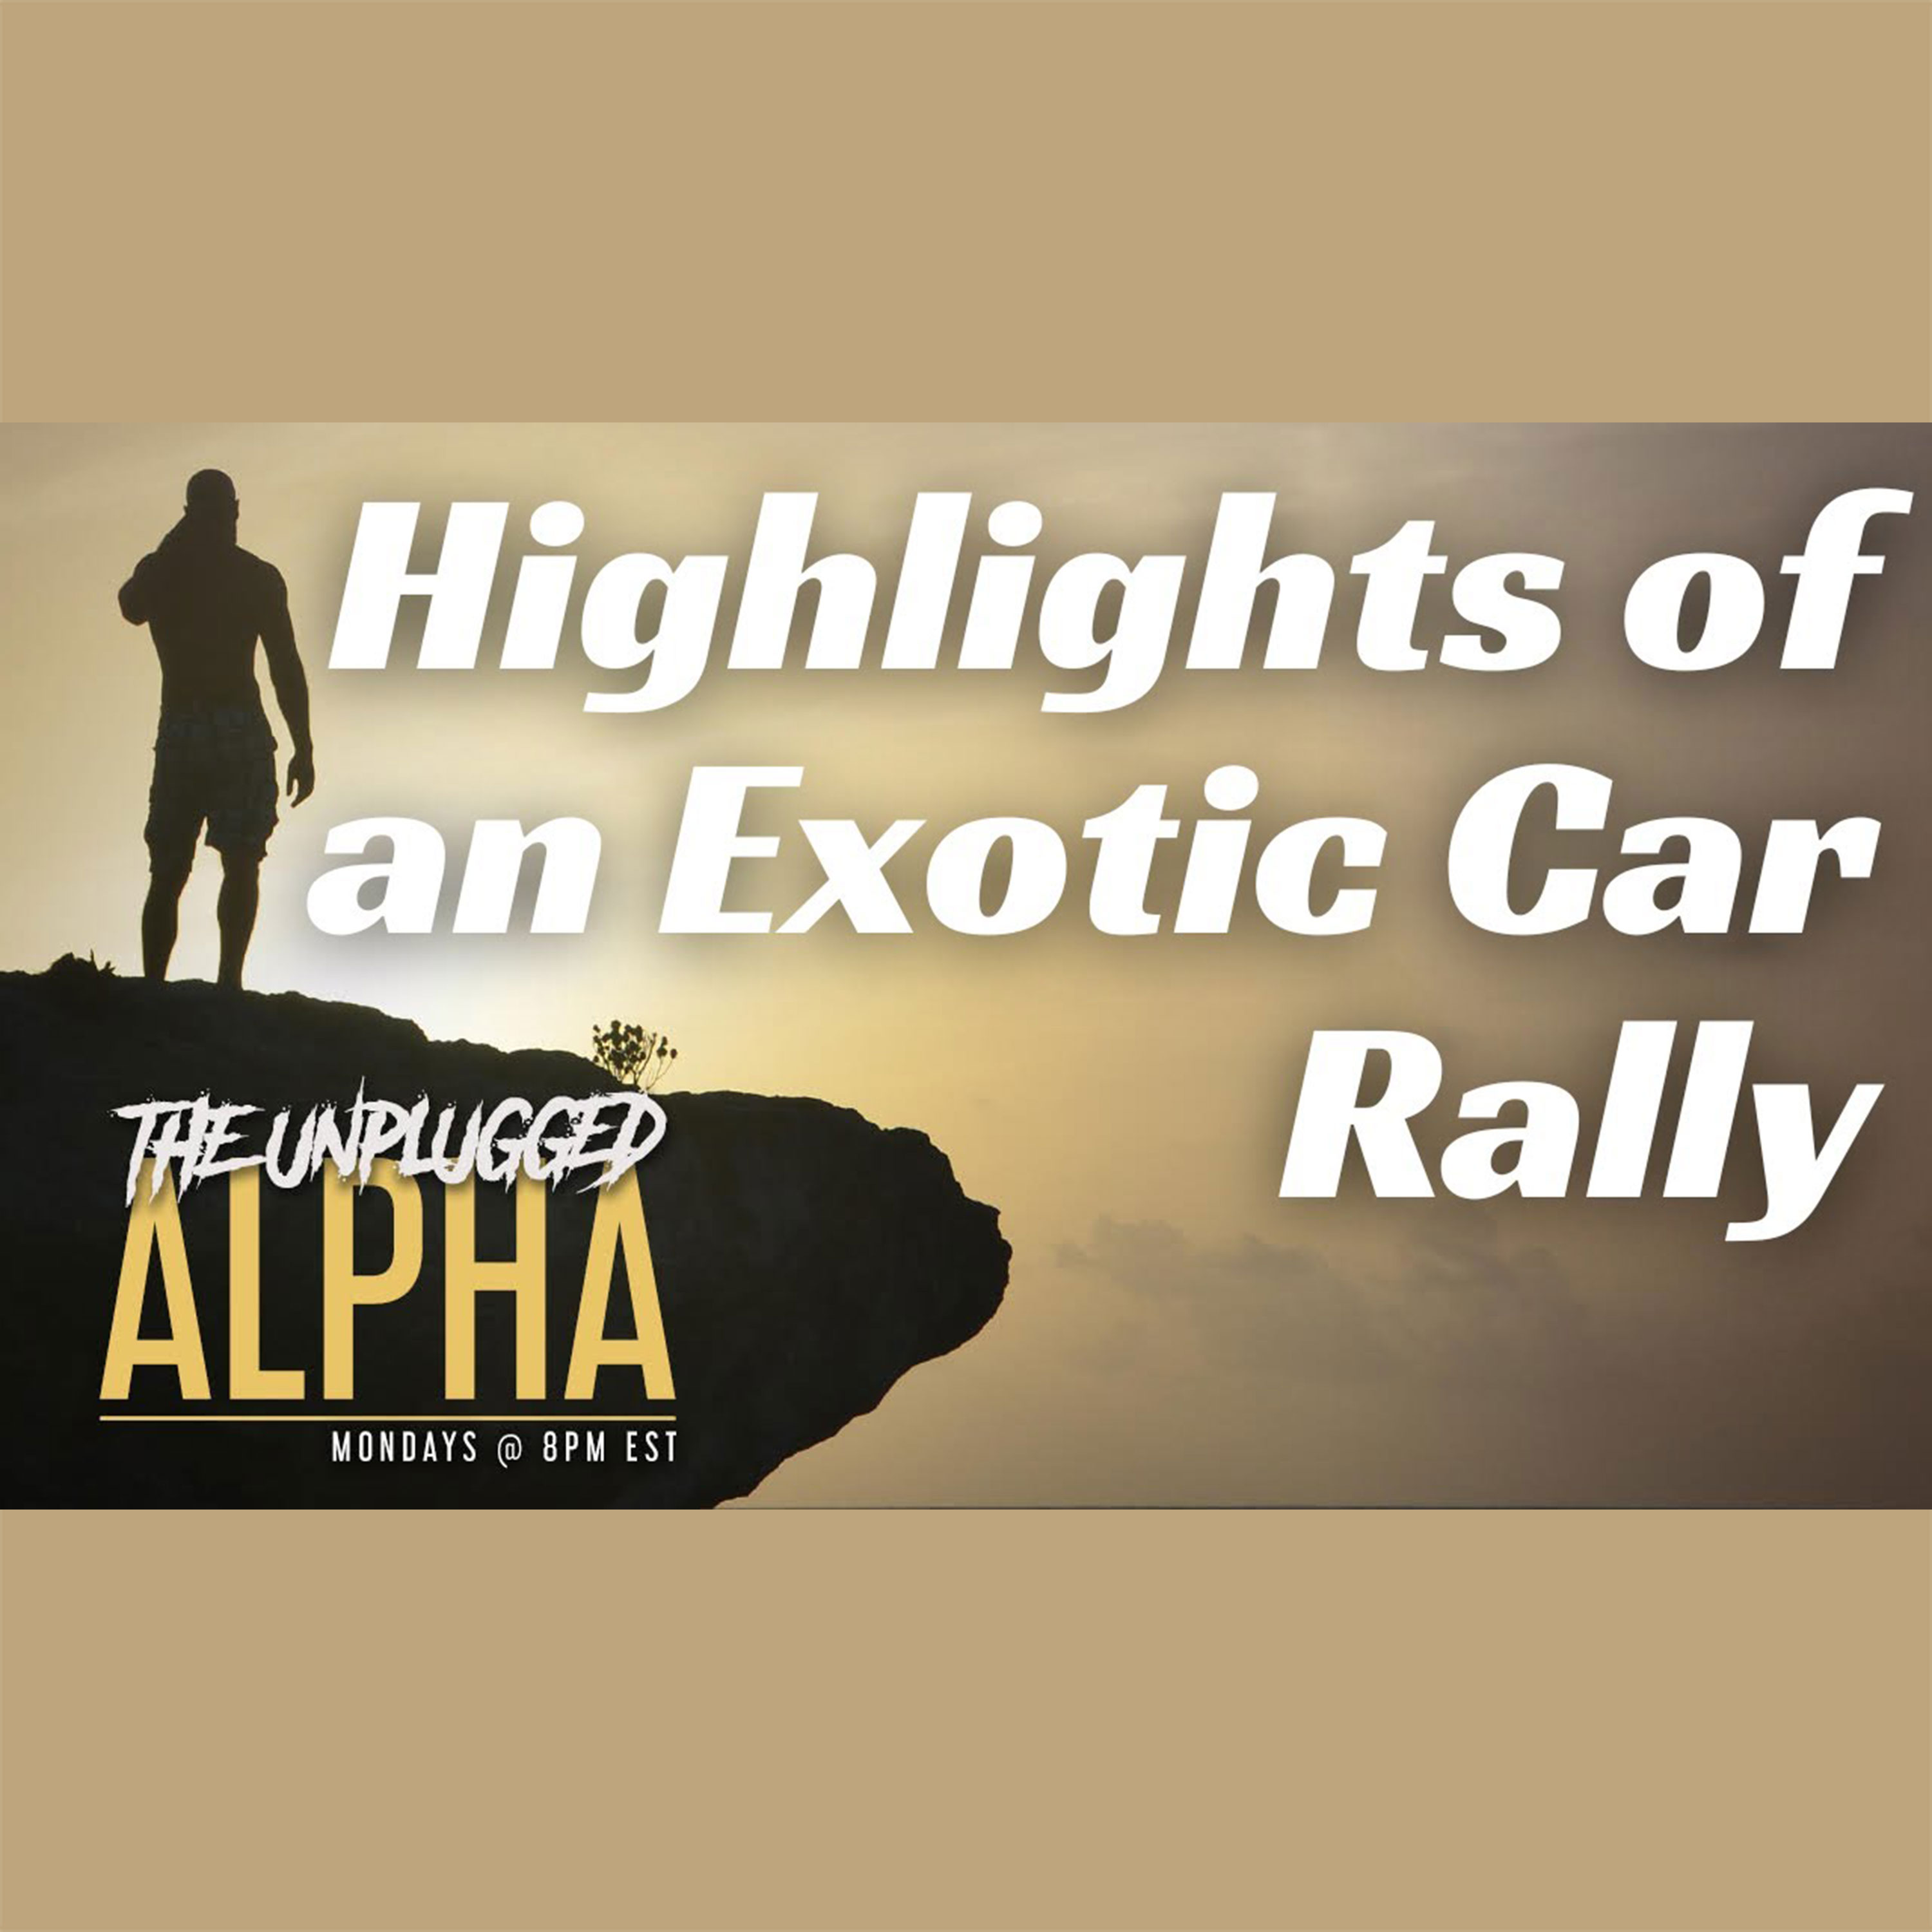 052 - The REAL GTA - Exotic Car Rally Highlights